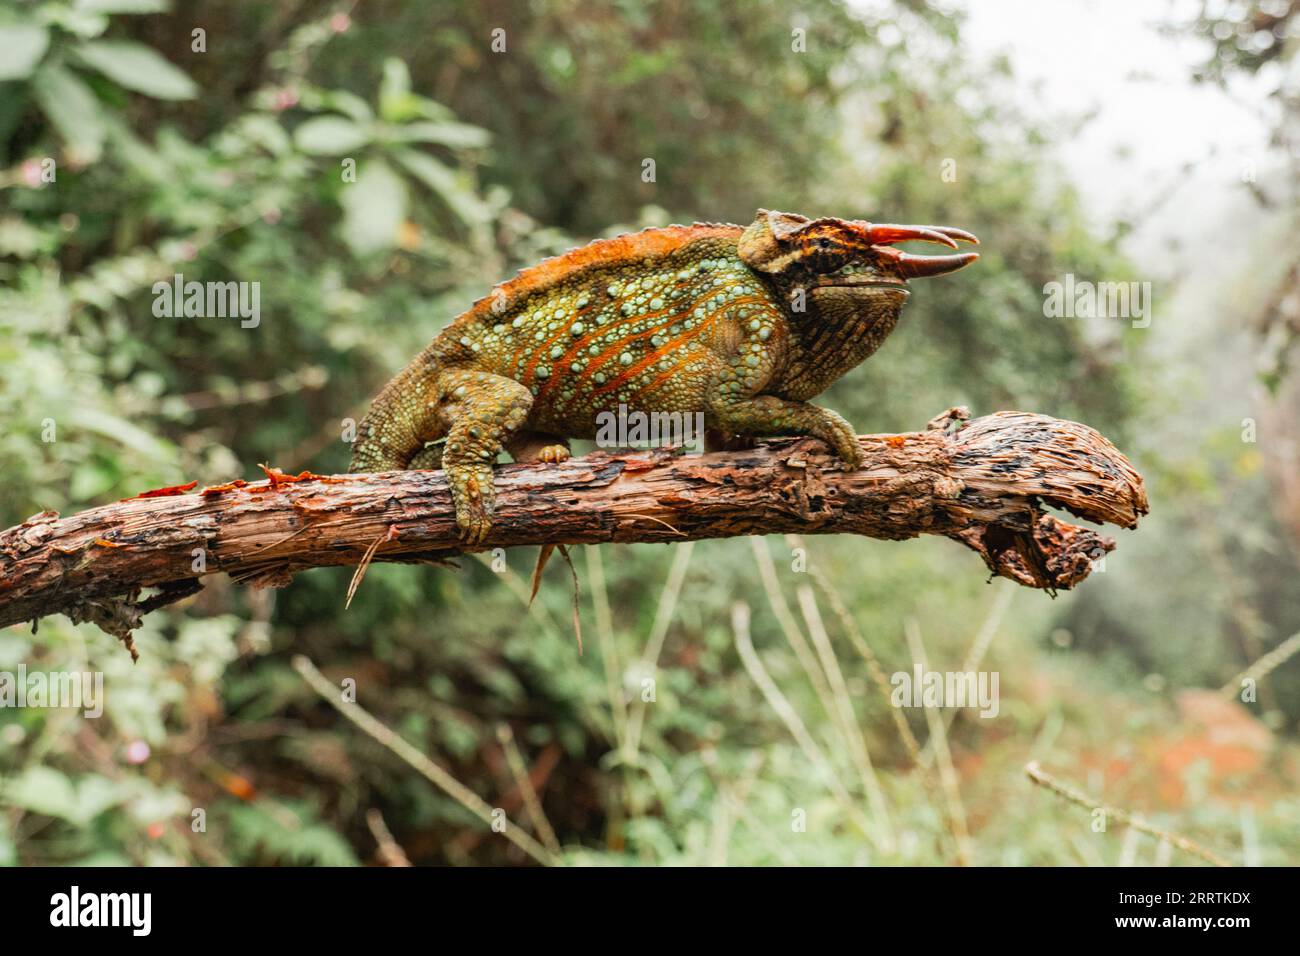 Wemer's three horned chameleon or Uluguru three horned chameleon - Trioceros werneri endemic to Tanzania on a branch at Uluguru Mountains, Tanzania Stock Photo